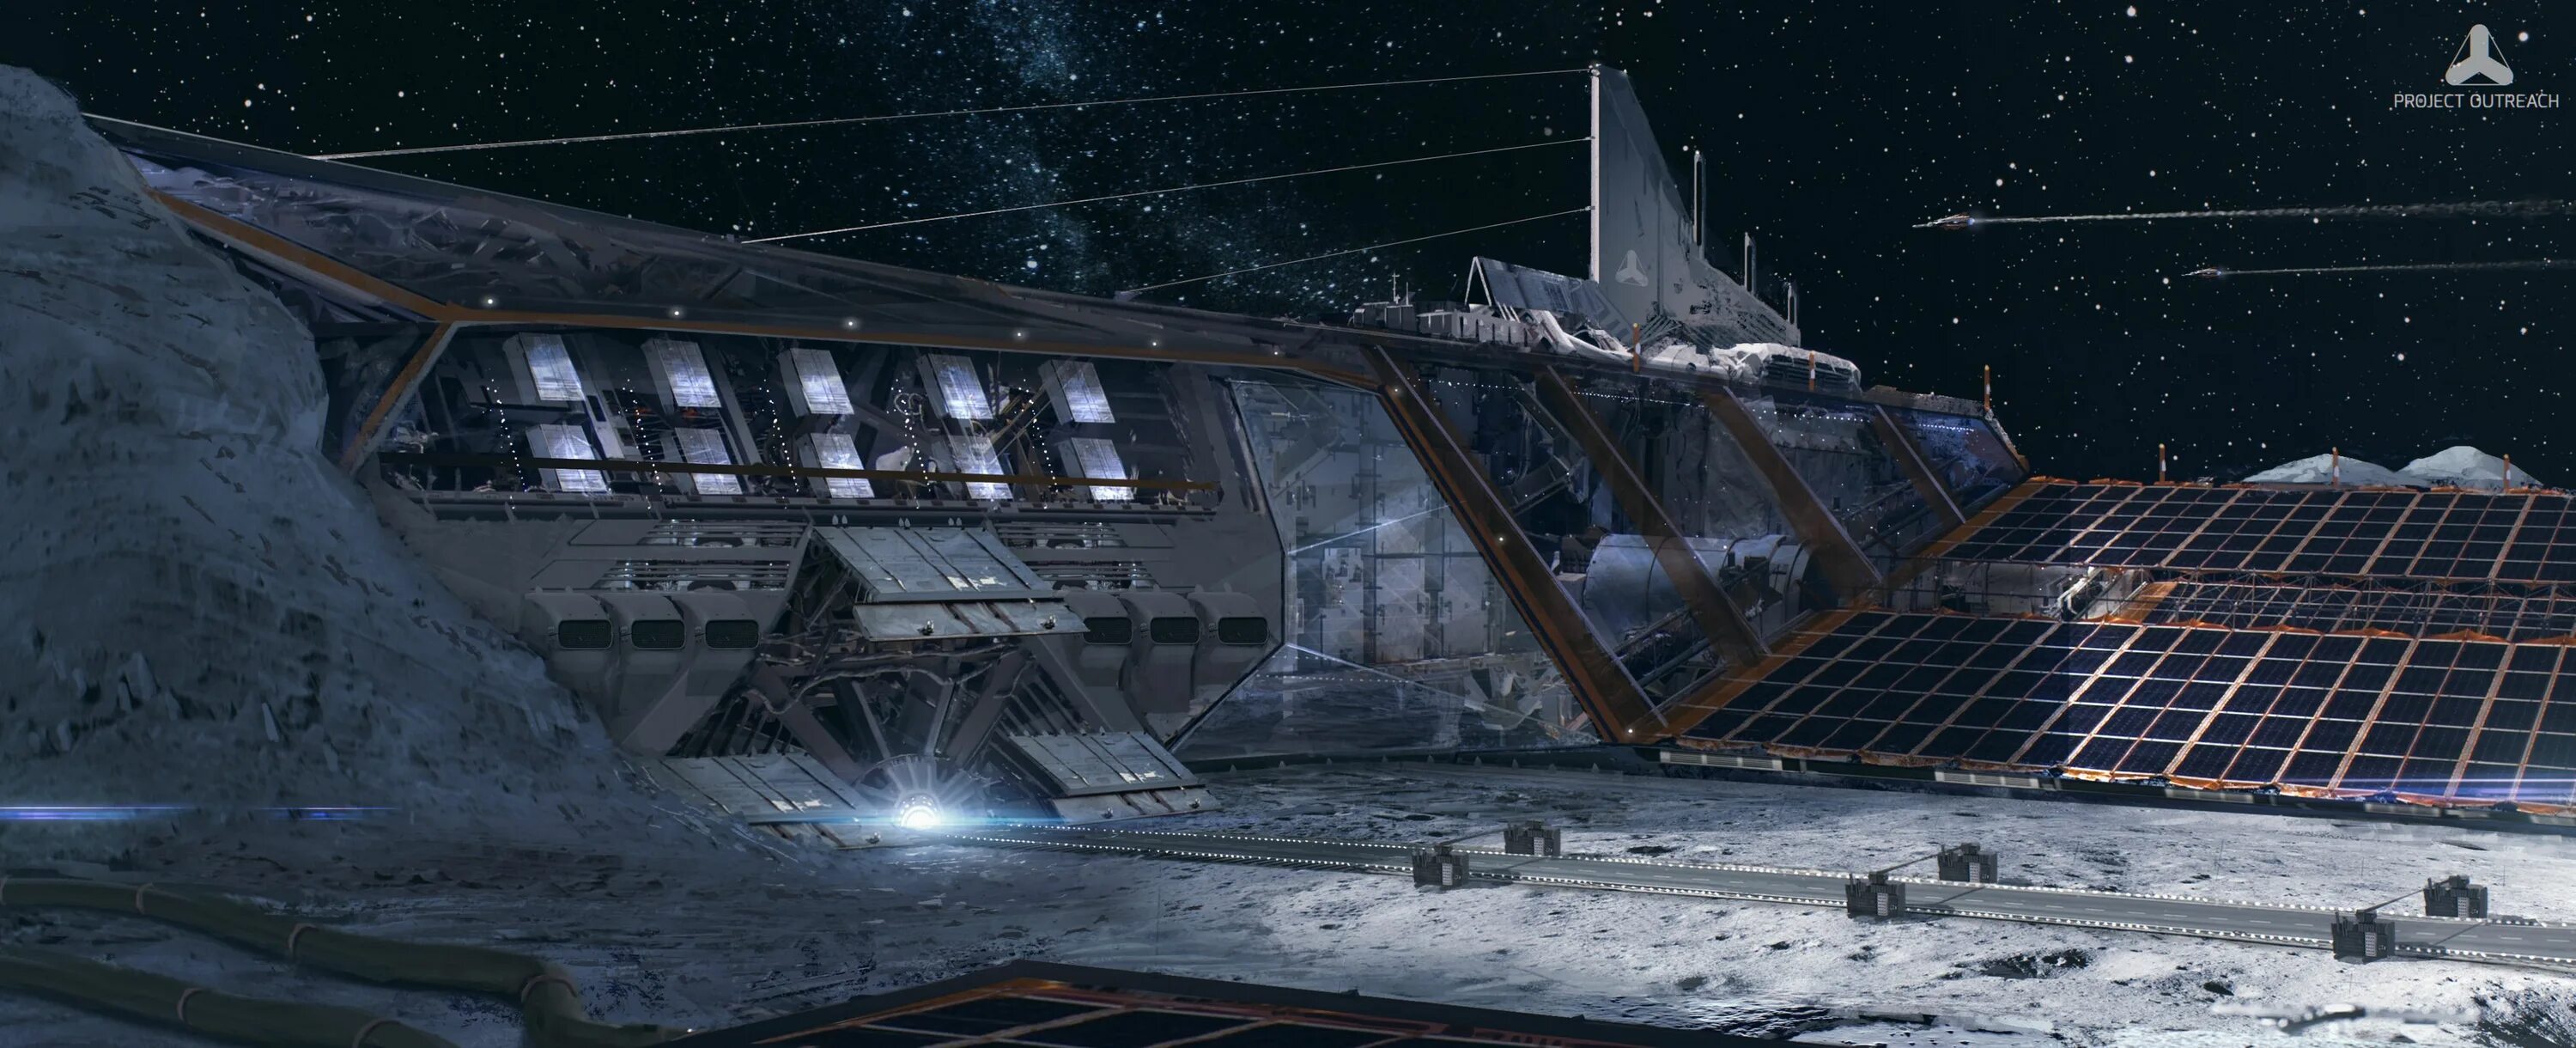 Black station satomic moon. Ноев Ковчег космический корабль. Лунная станция концепт. Лунная база будущего концепт арт. Космическая база.